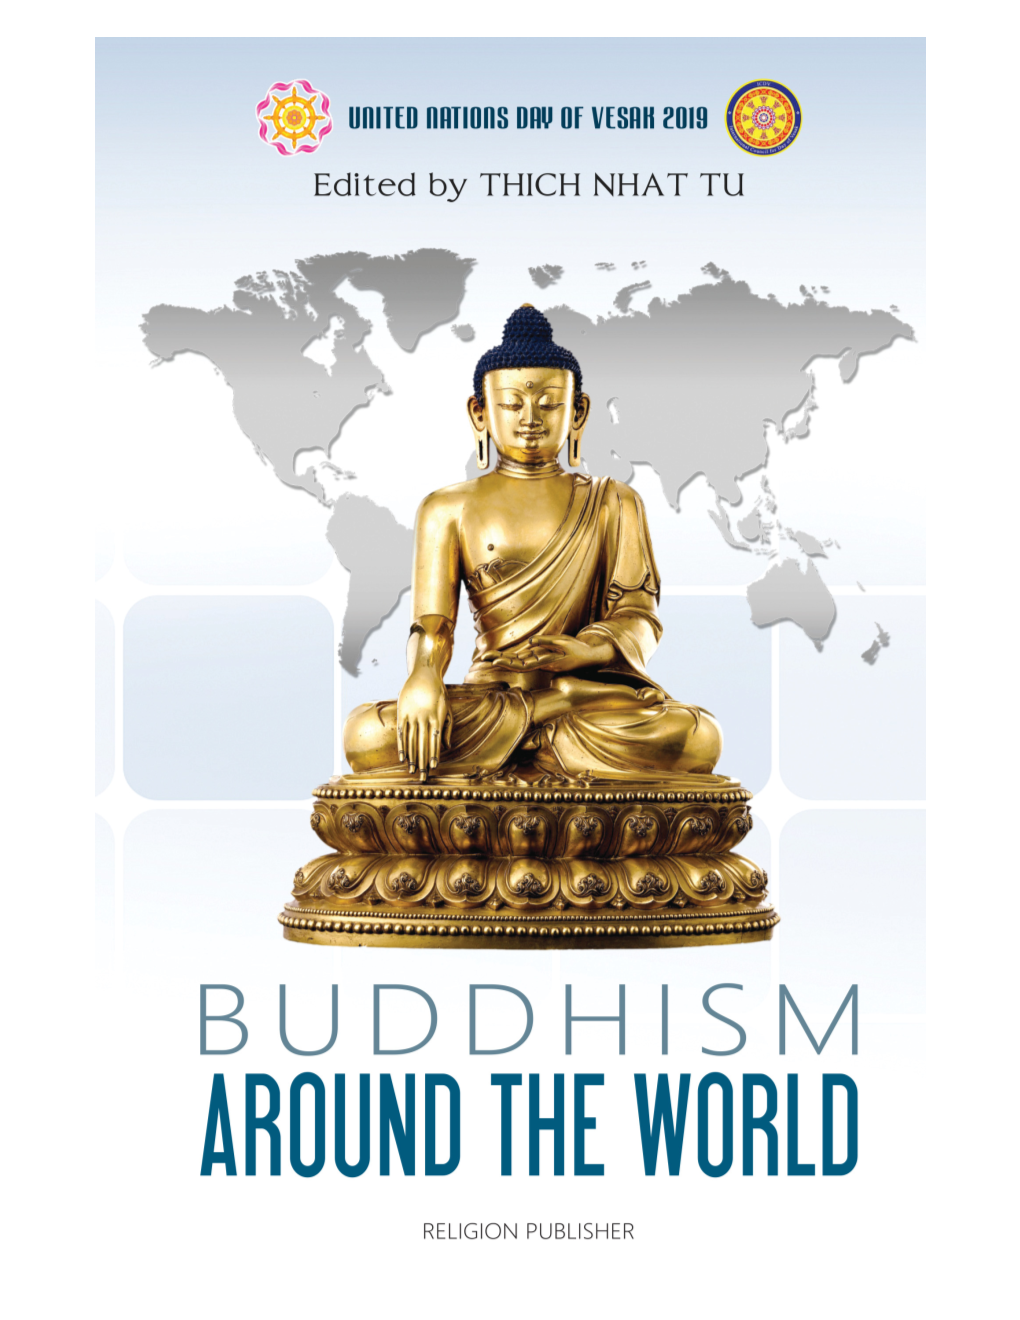 Buddhism in the Modern World